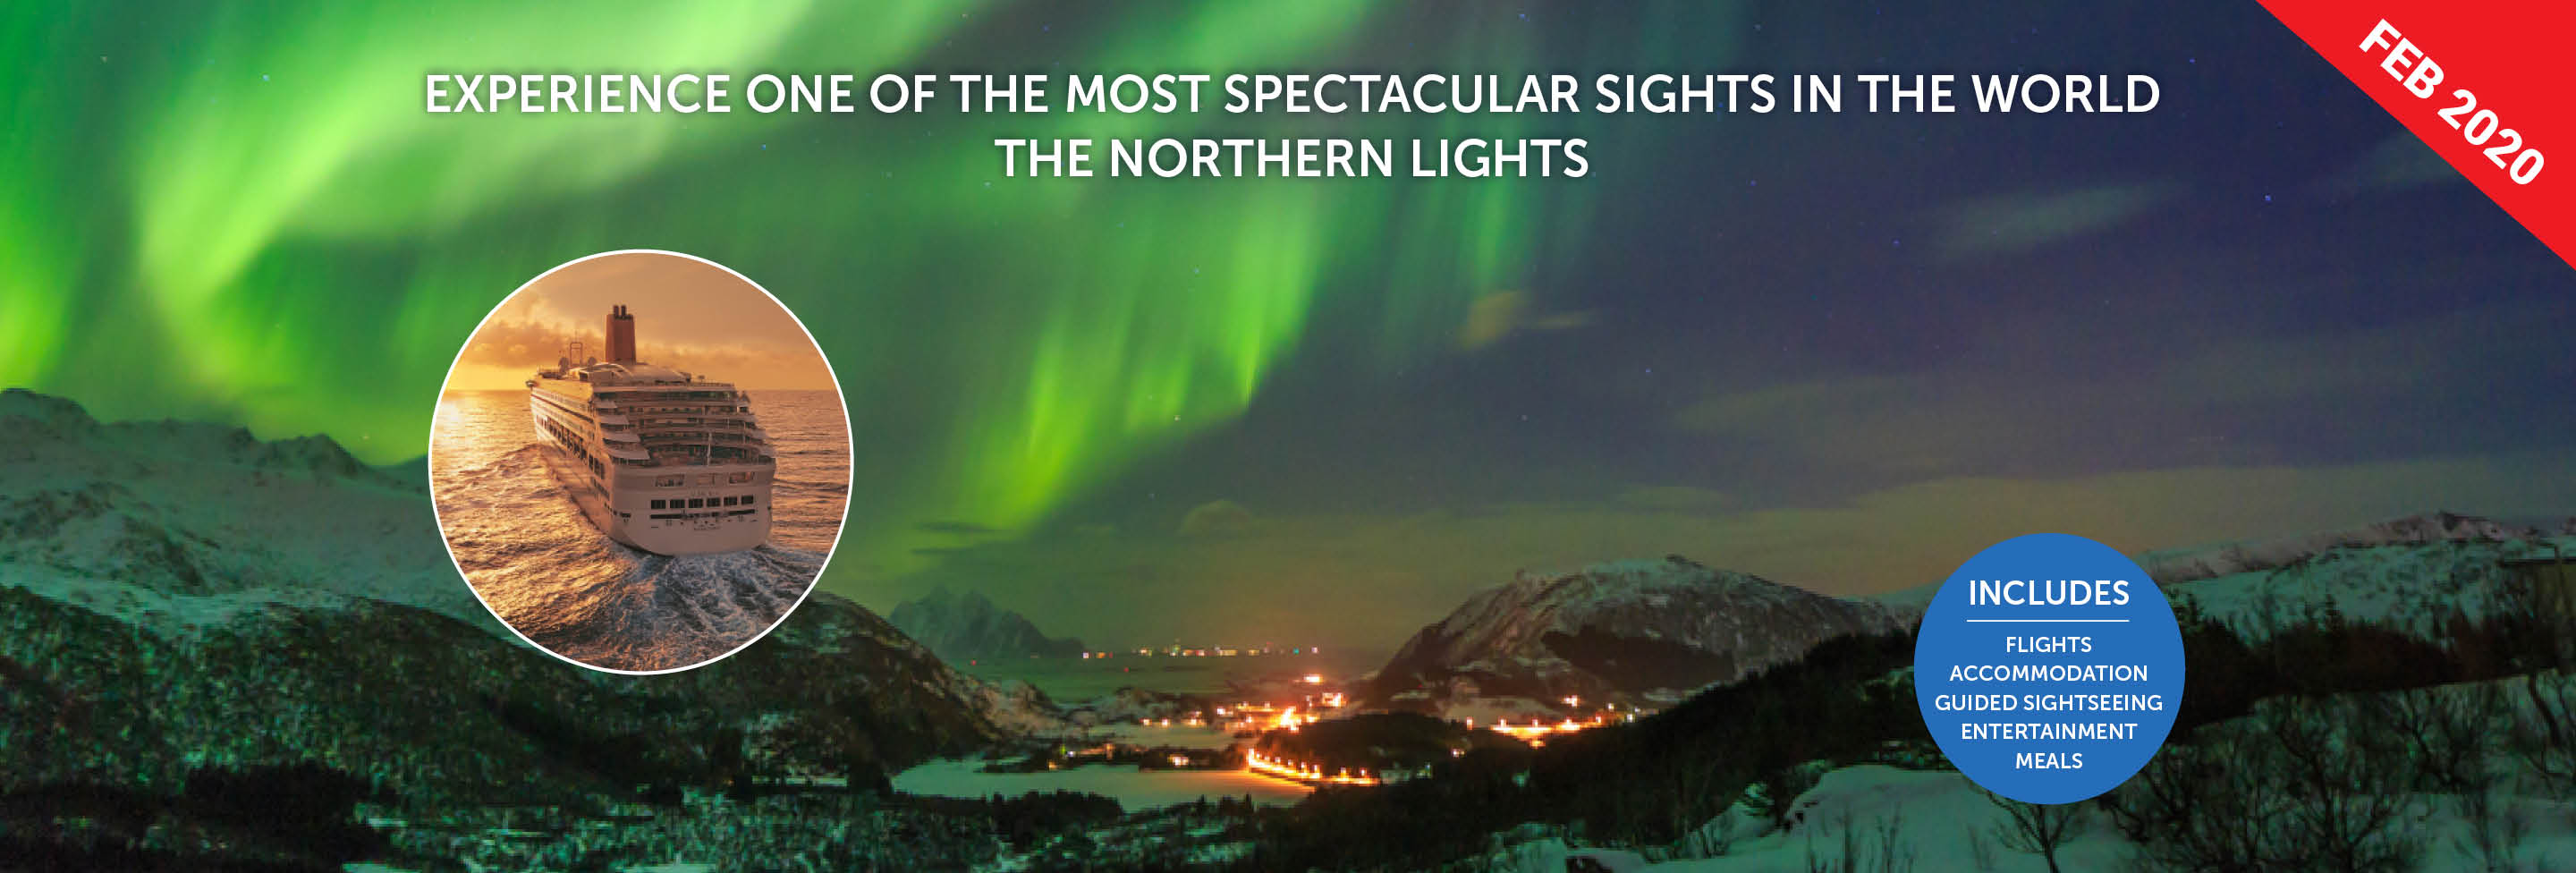 northern-lights-feb-2020-1.jpg